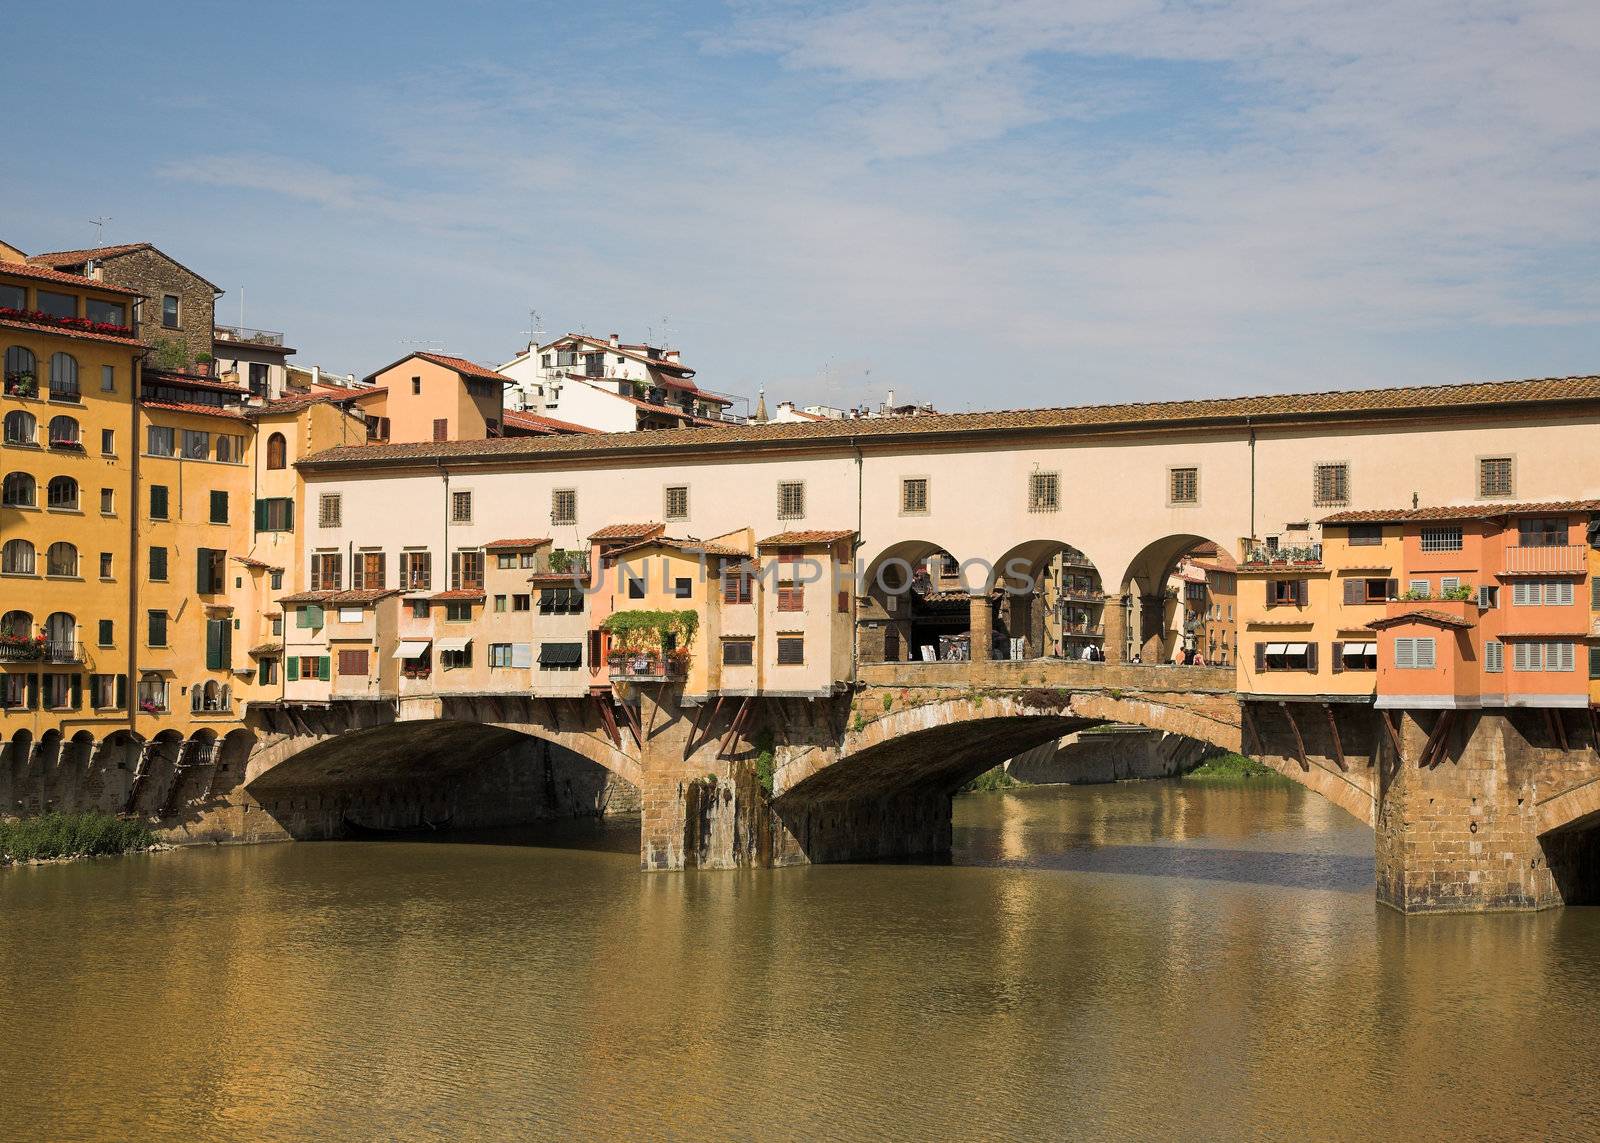 The Ponte Vecchio by grandaded